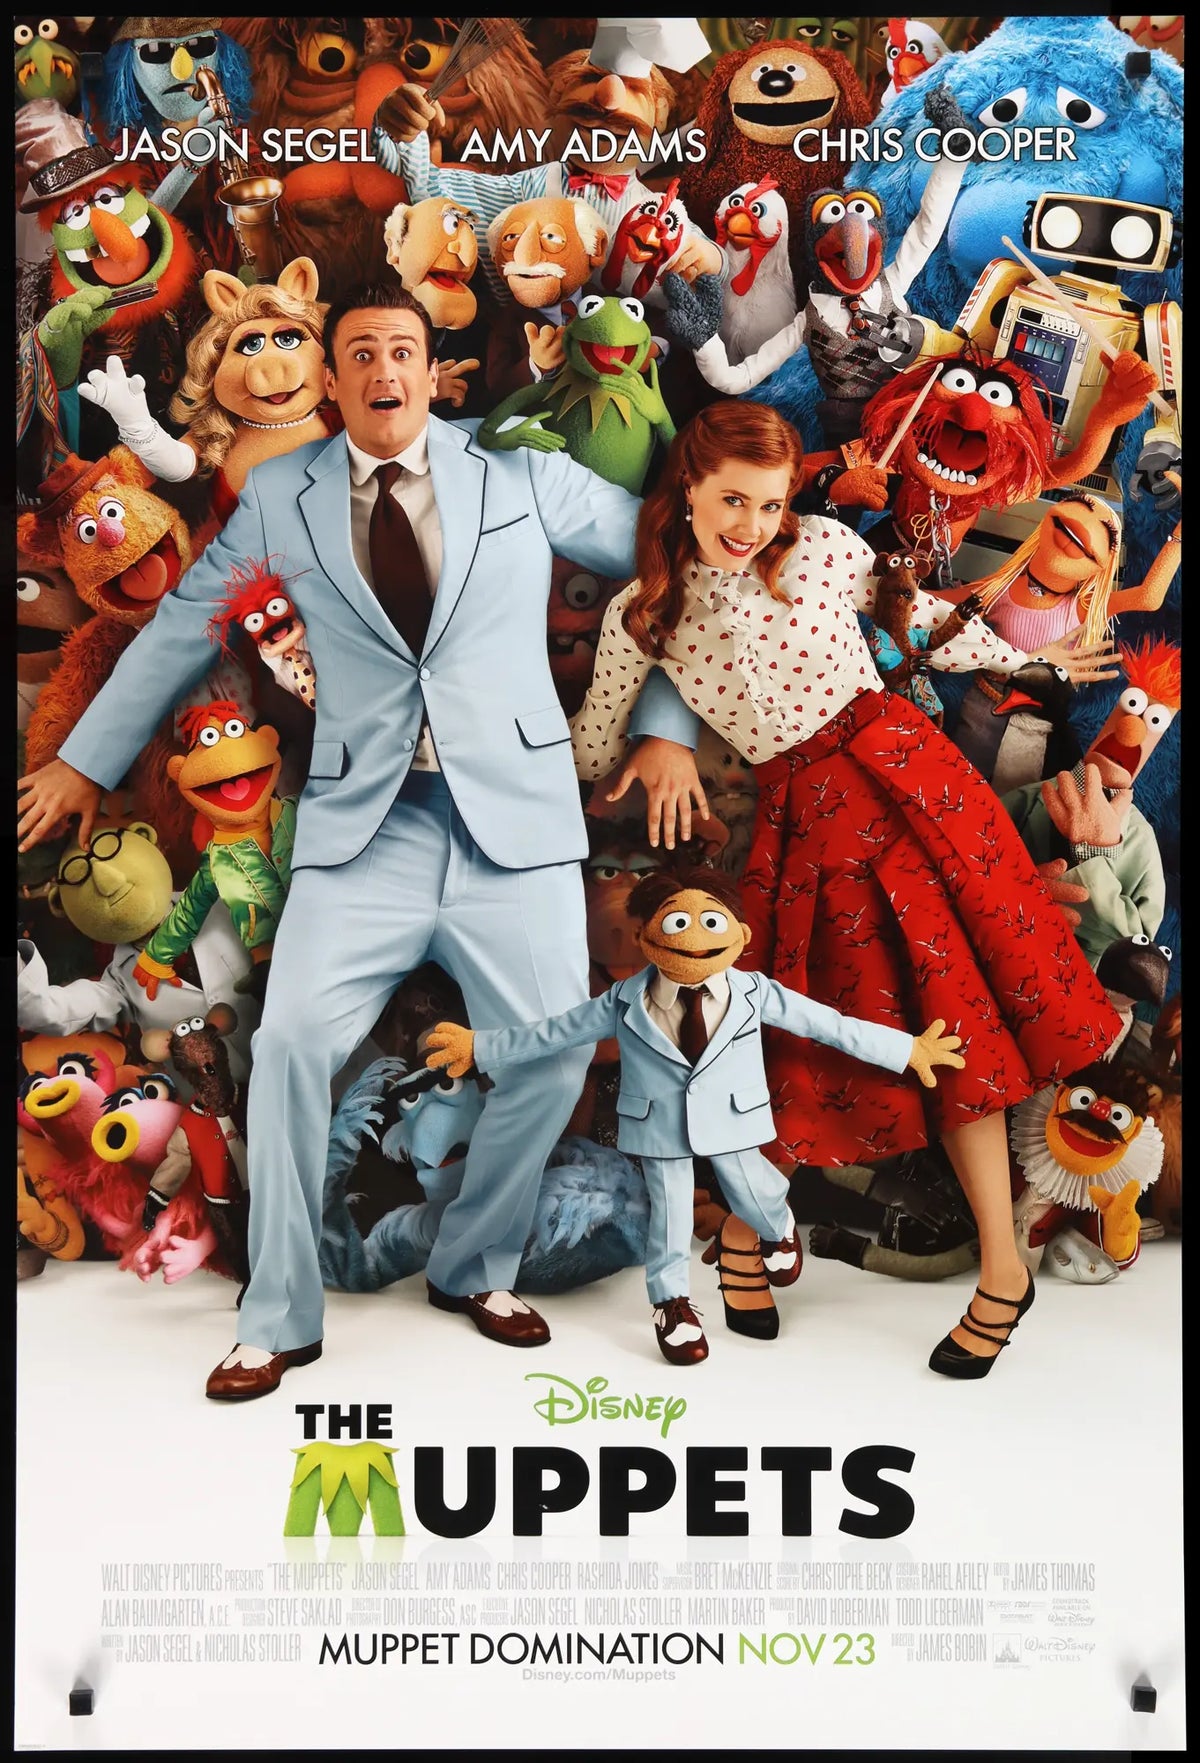 Muppets (2011) original movie poster for sale at Original Film Art